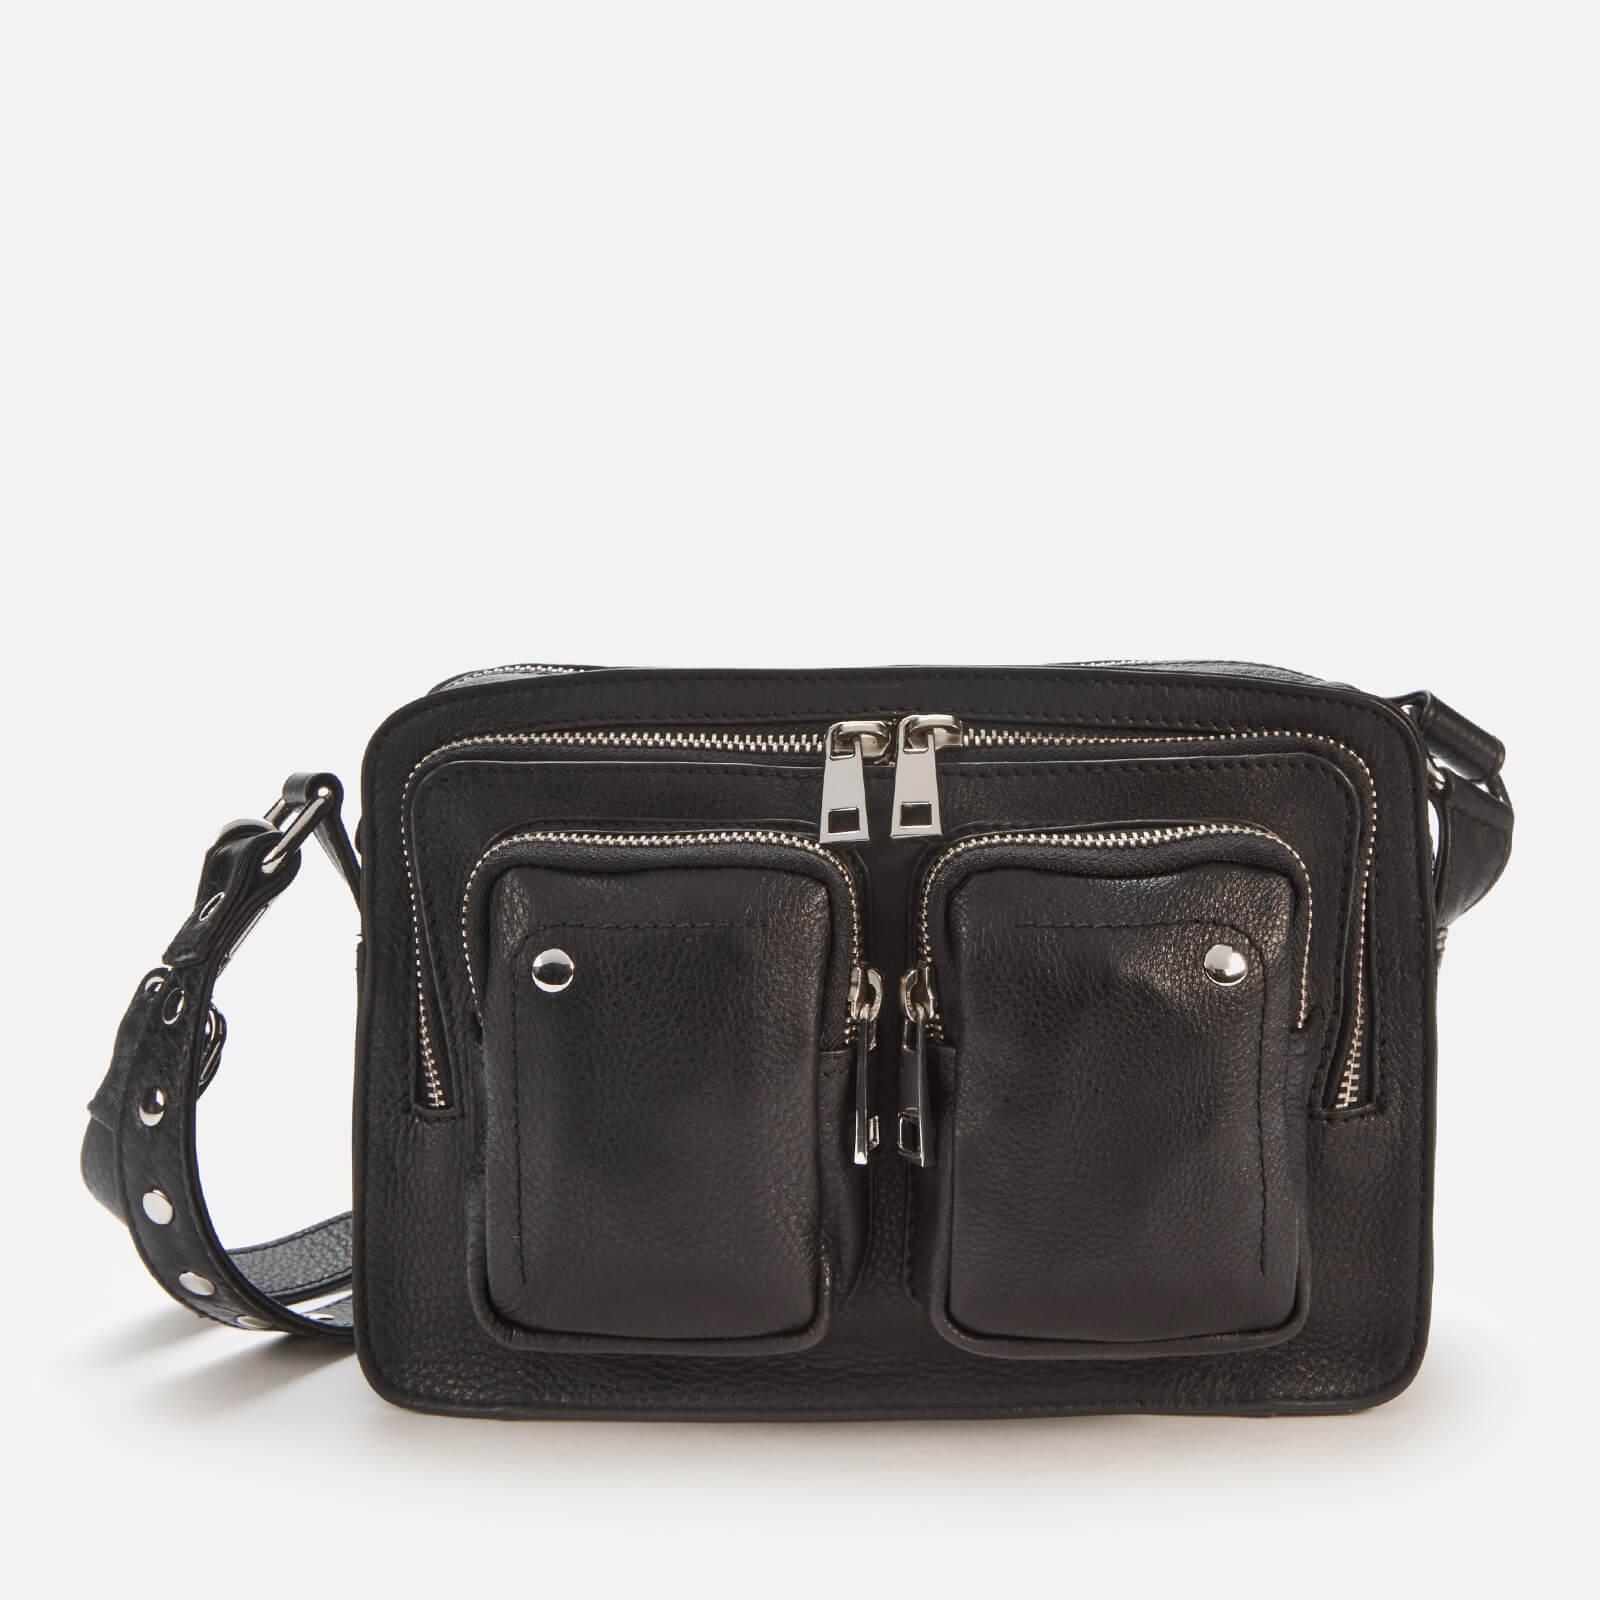 Nunoo Leather Ellie Deluxe Bag in Black - Lyst